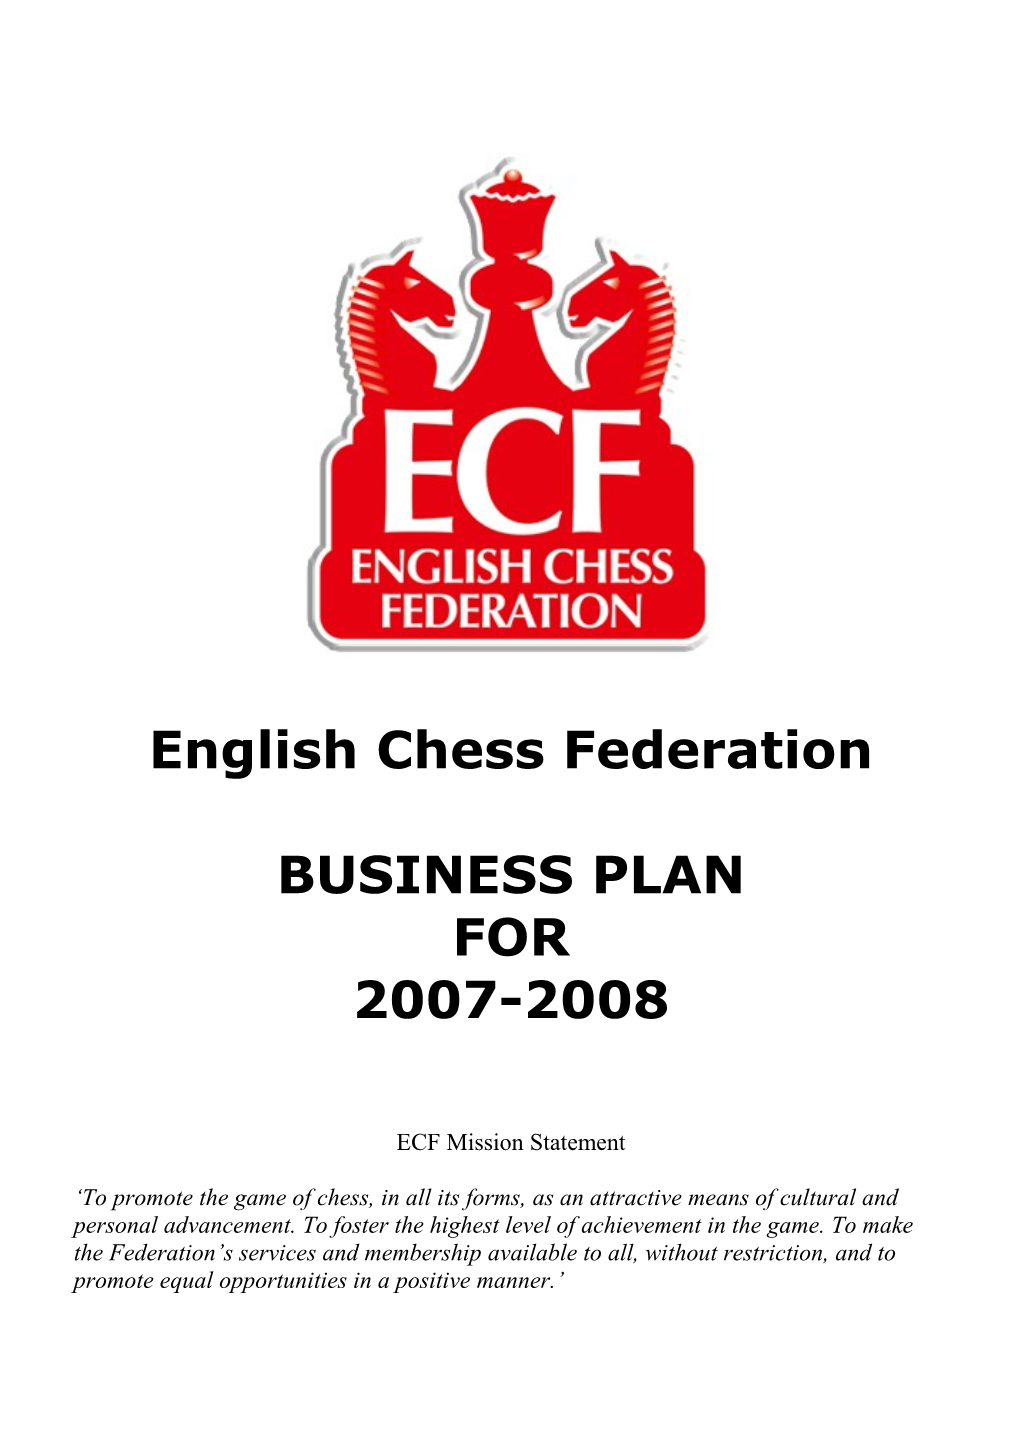 Business Plan 2007/2008